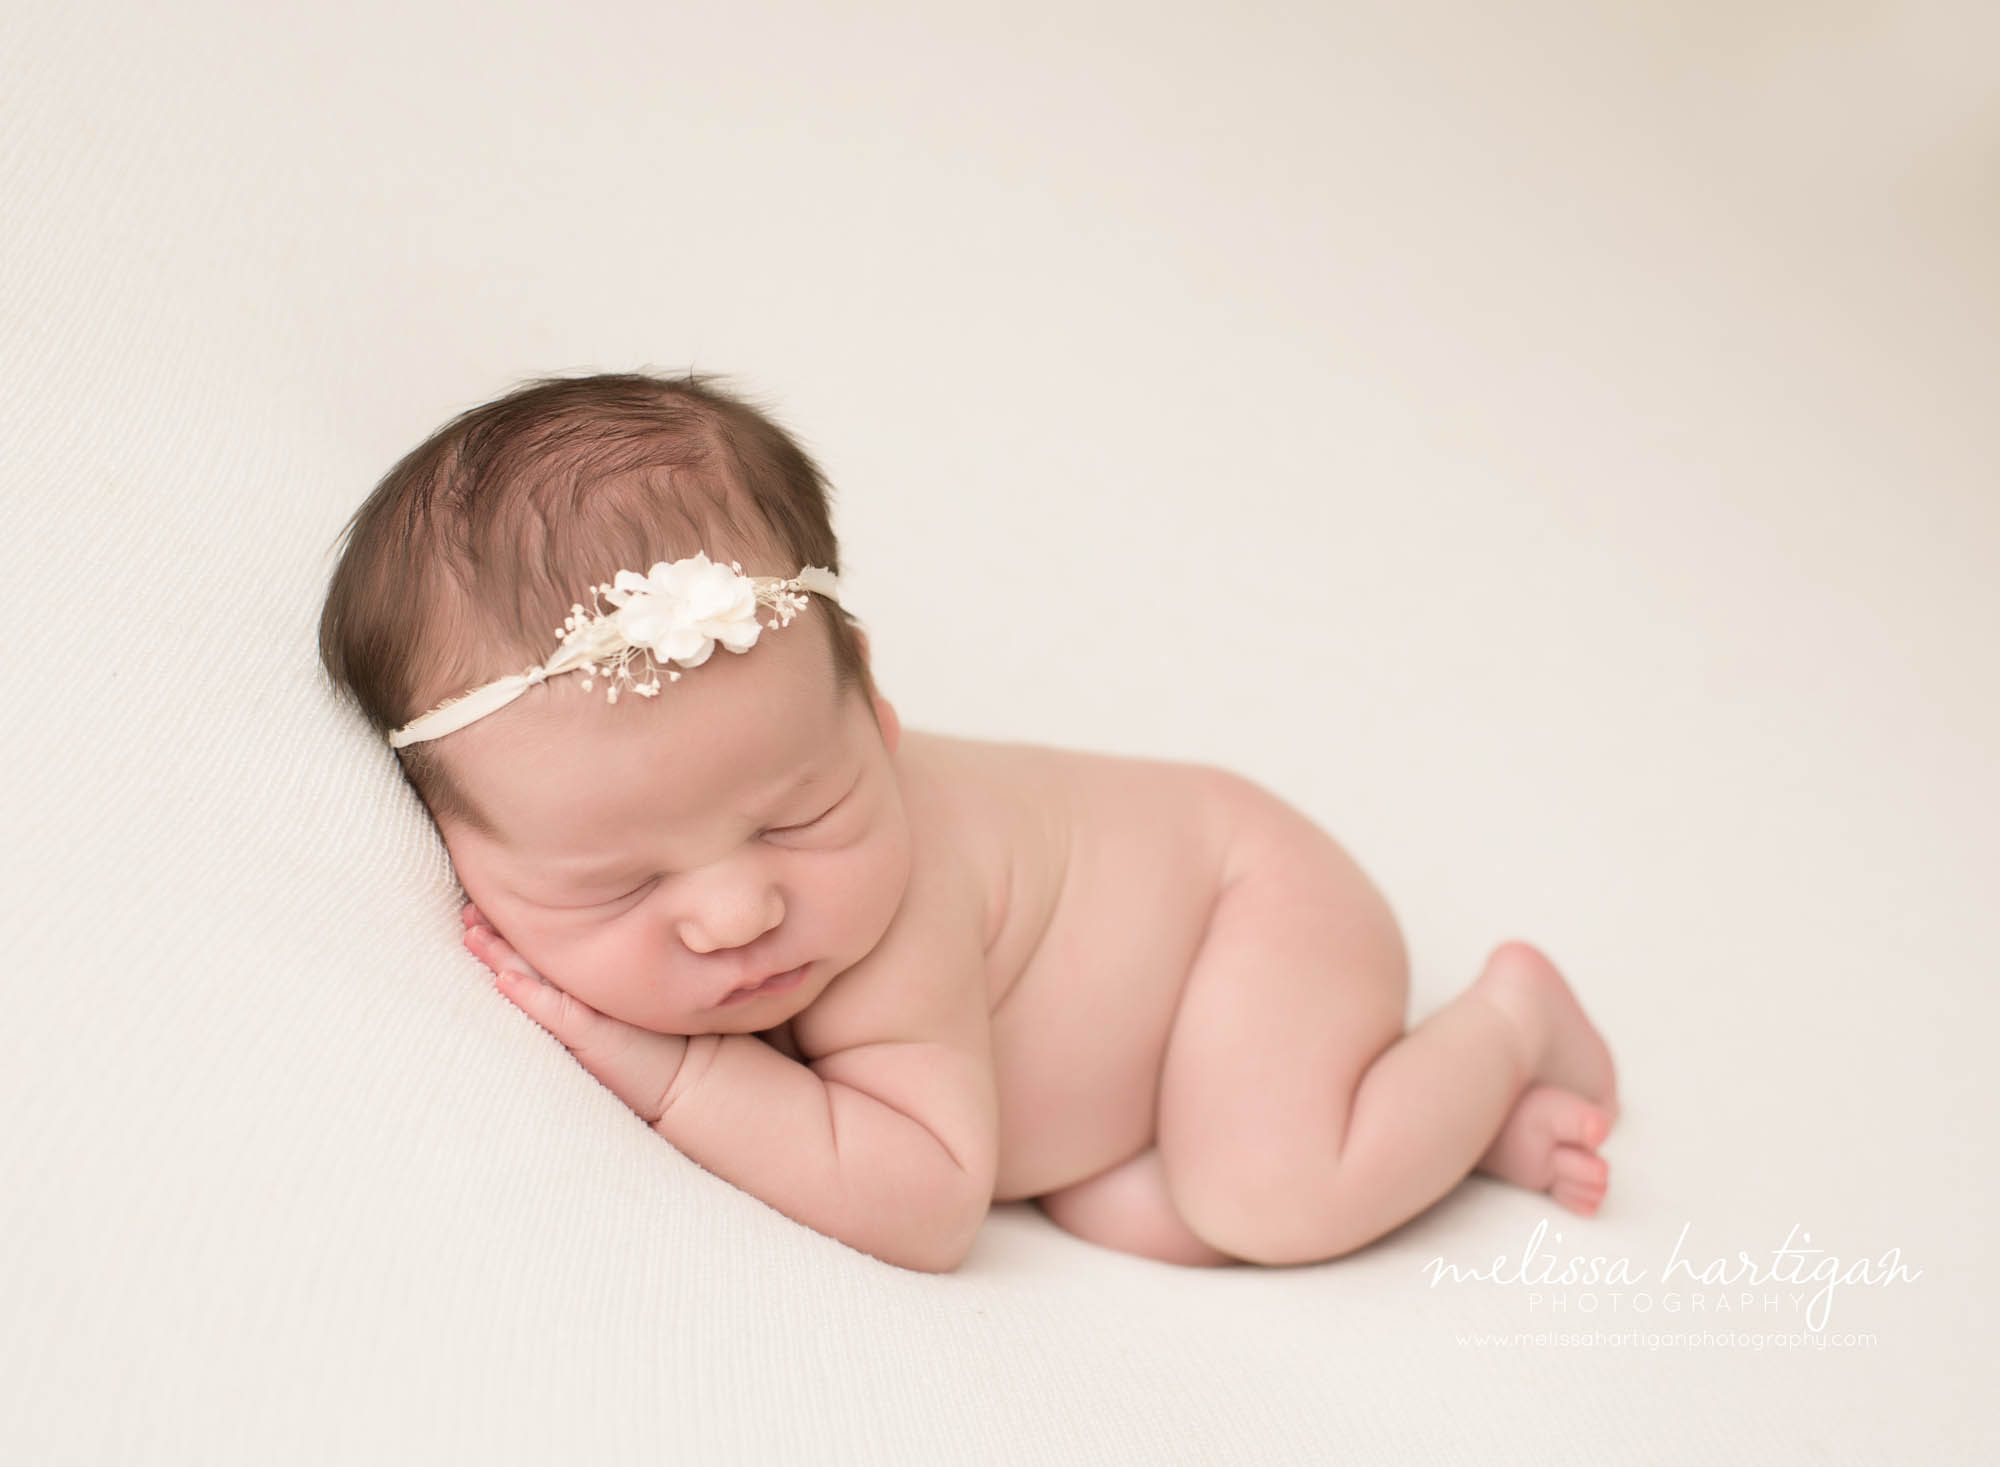 Melissa Hartigan Photography CT Newborn Photographer Emerson CT Newborn Session baby girl sleeping with hands tucked under cheek on cream blanket wearing white floral headband